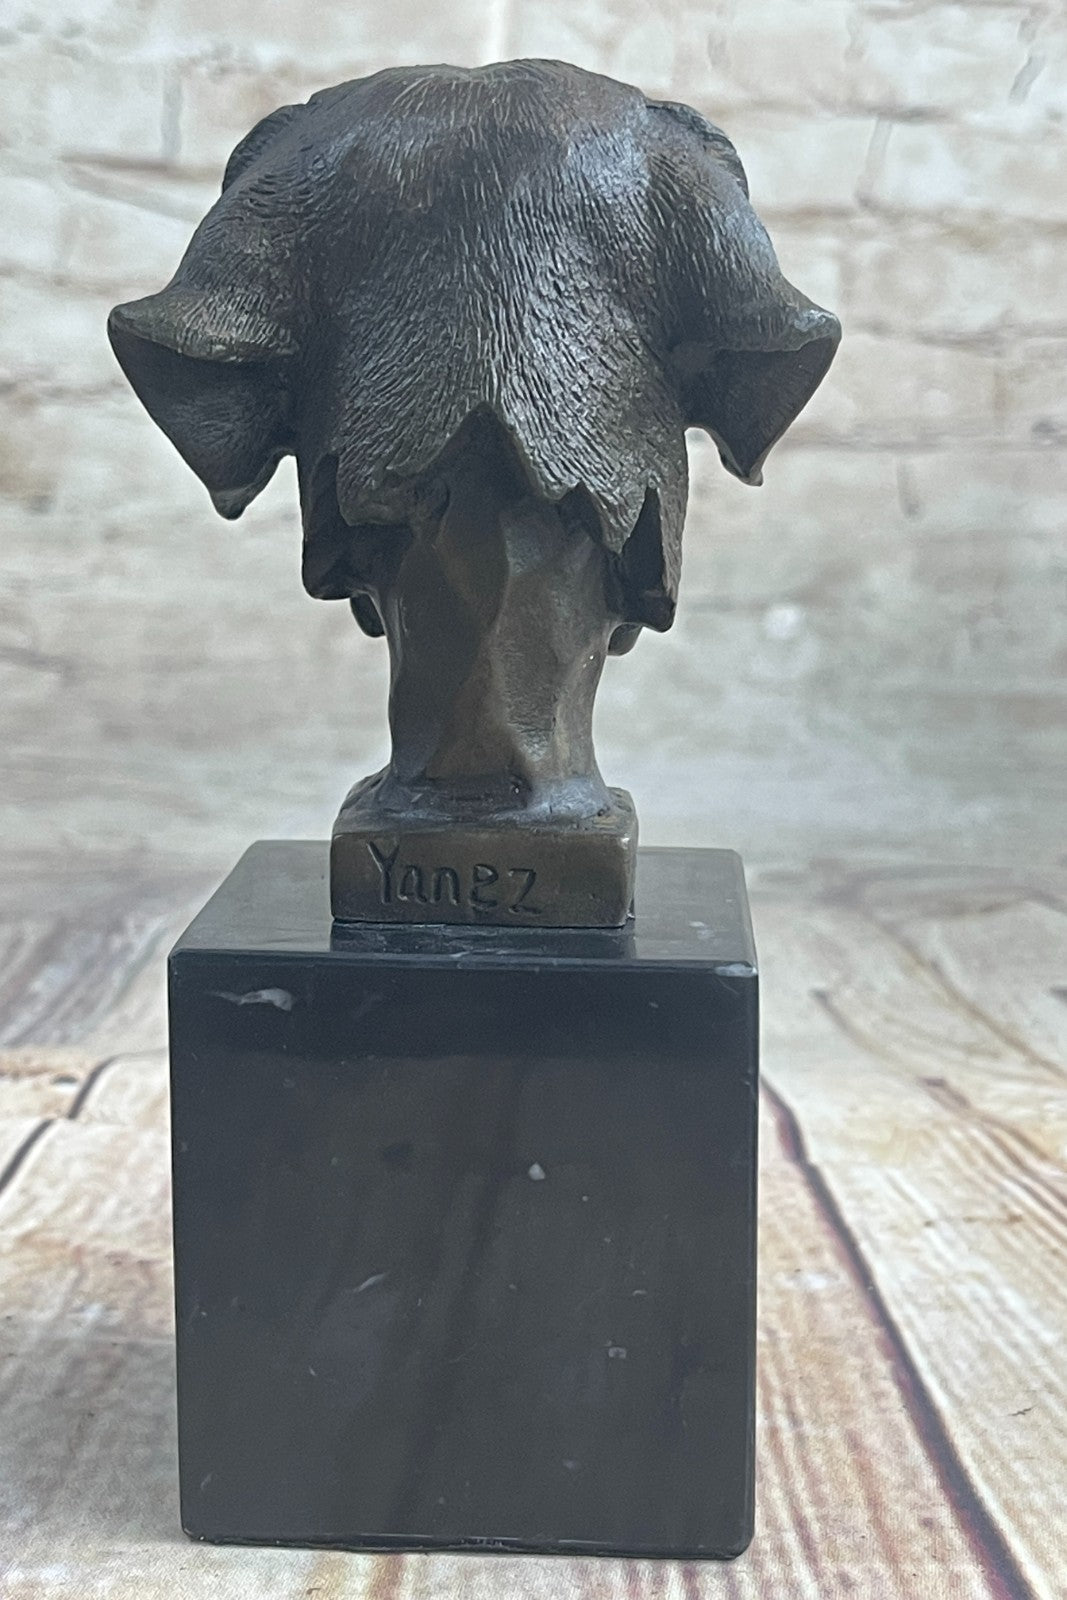 Handcrafted bronze sculpture SALE Book Base Marble Bust Head Retriever Labrador